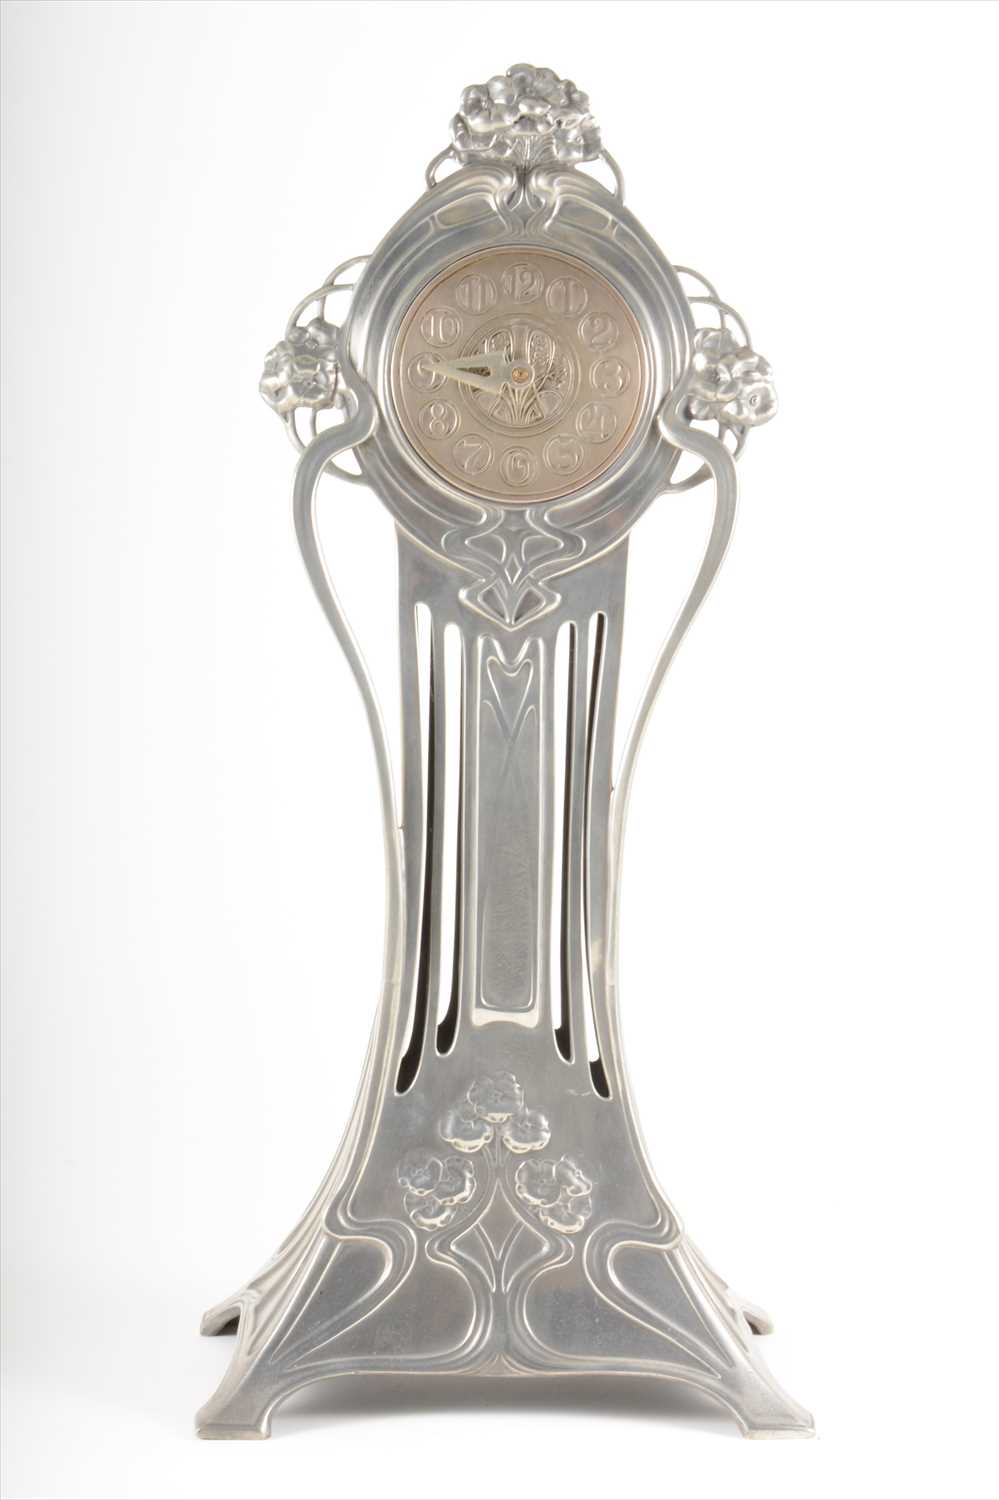 Lot 89 - An Art Nouveau silvered metal mantel clock, by WMF, circa 1900